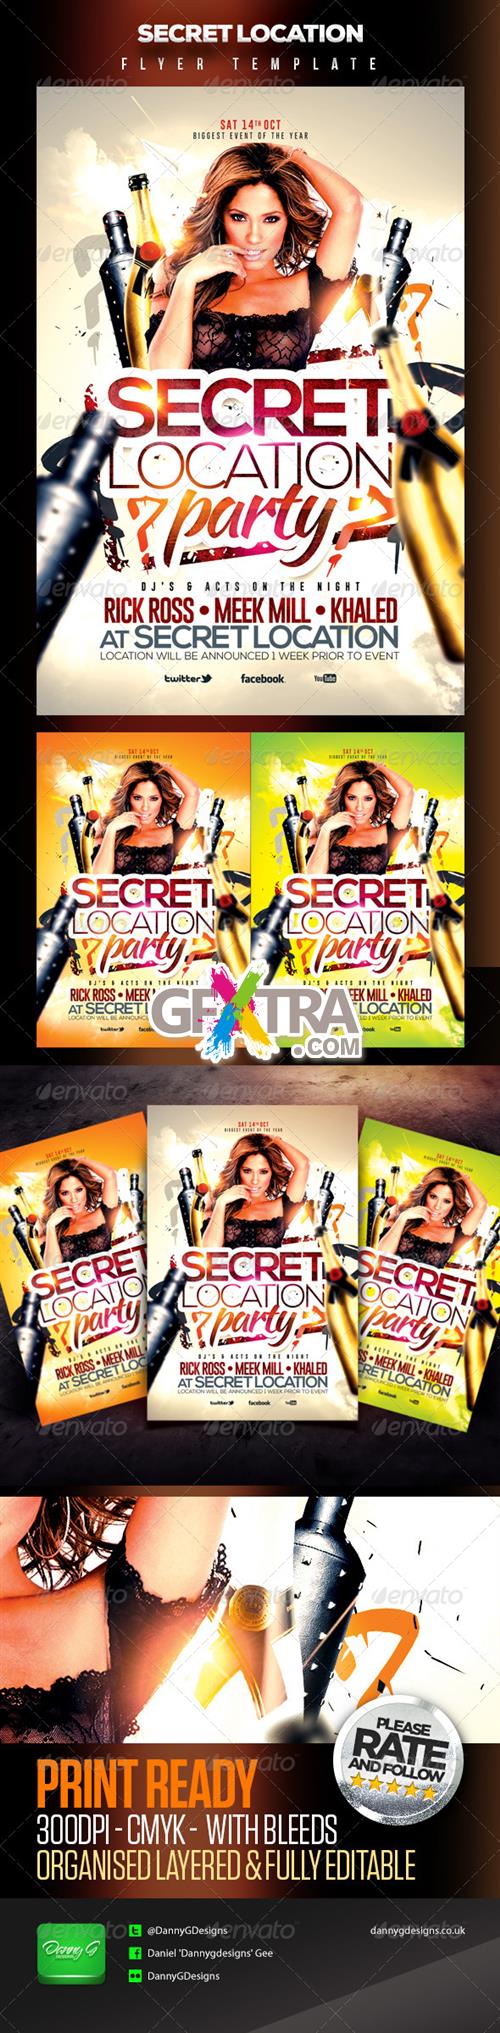 GraphicRiver - Secret Location Nightclub/Party Flyer Template